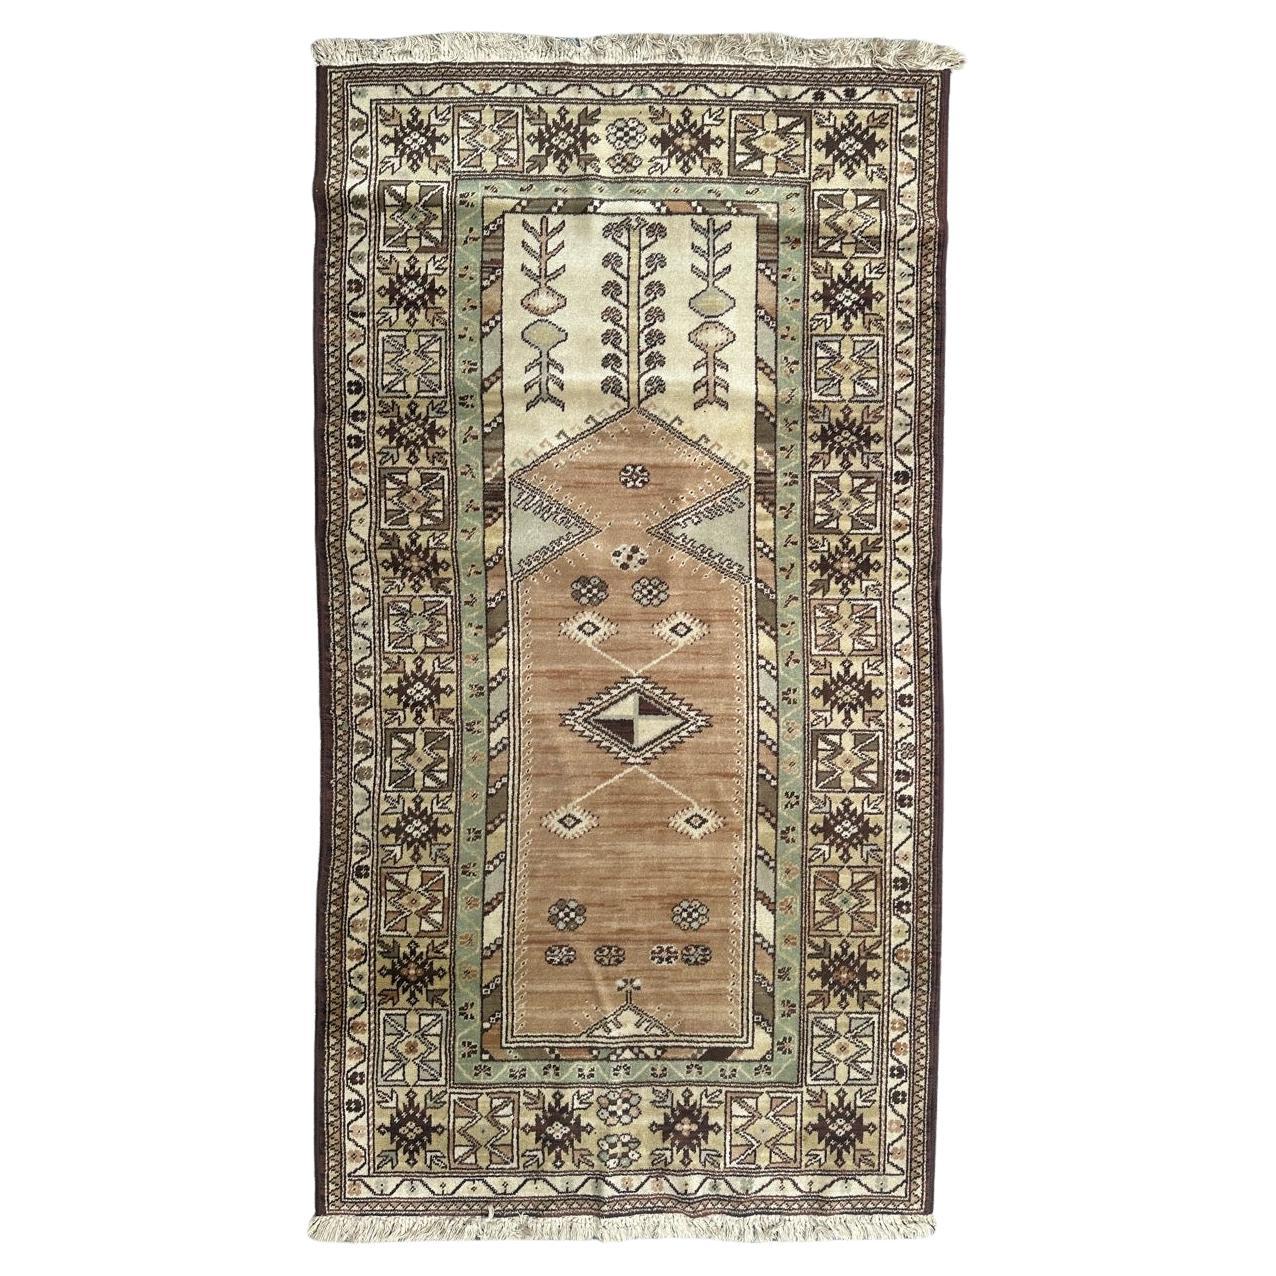 Bobyrug’s pretty vintage Turkish style rug